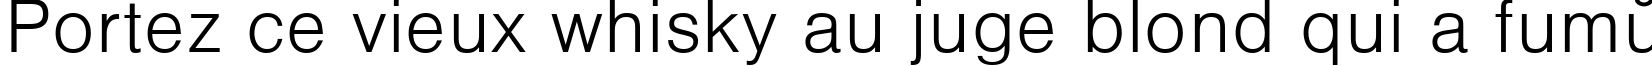 Пример написания шрифтом VantaLight текста на французском